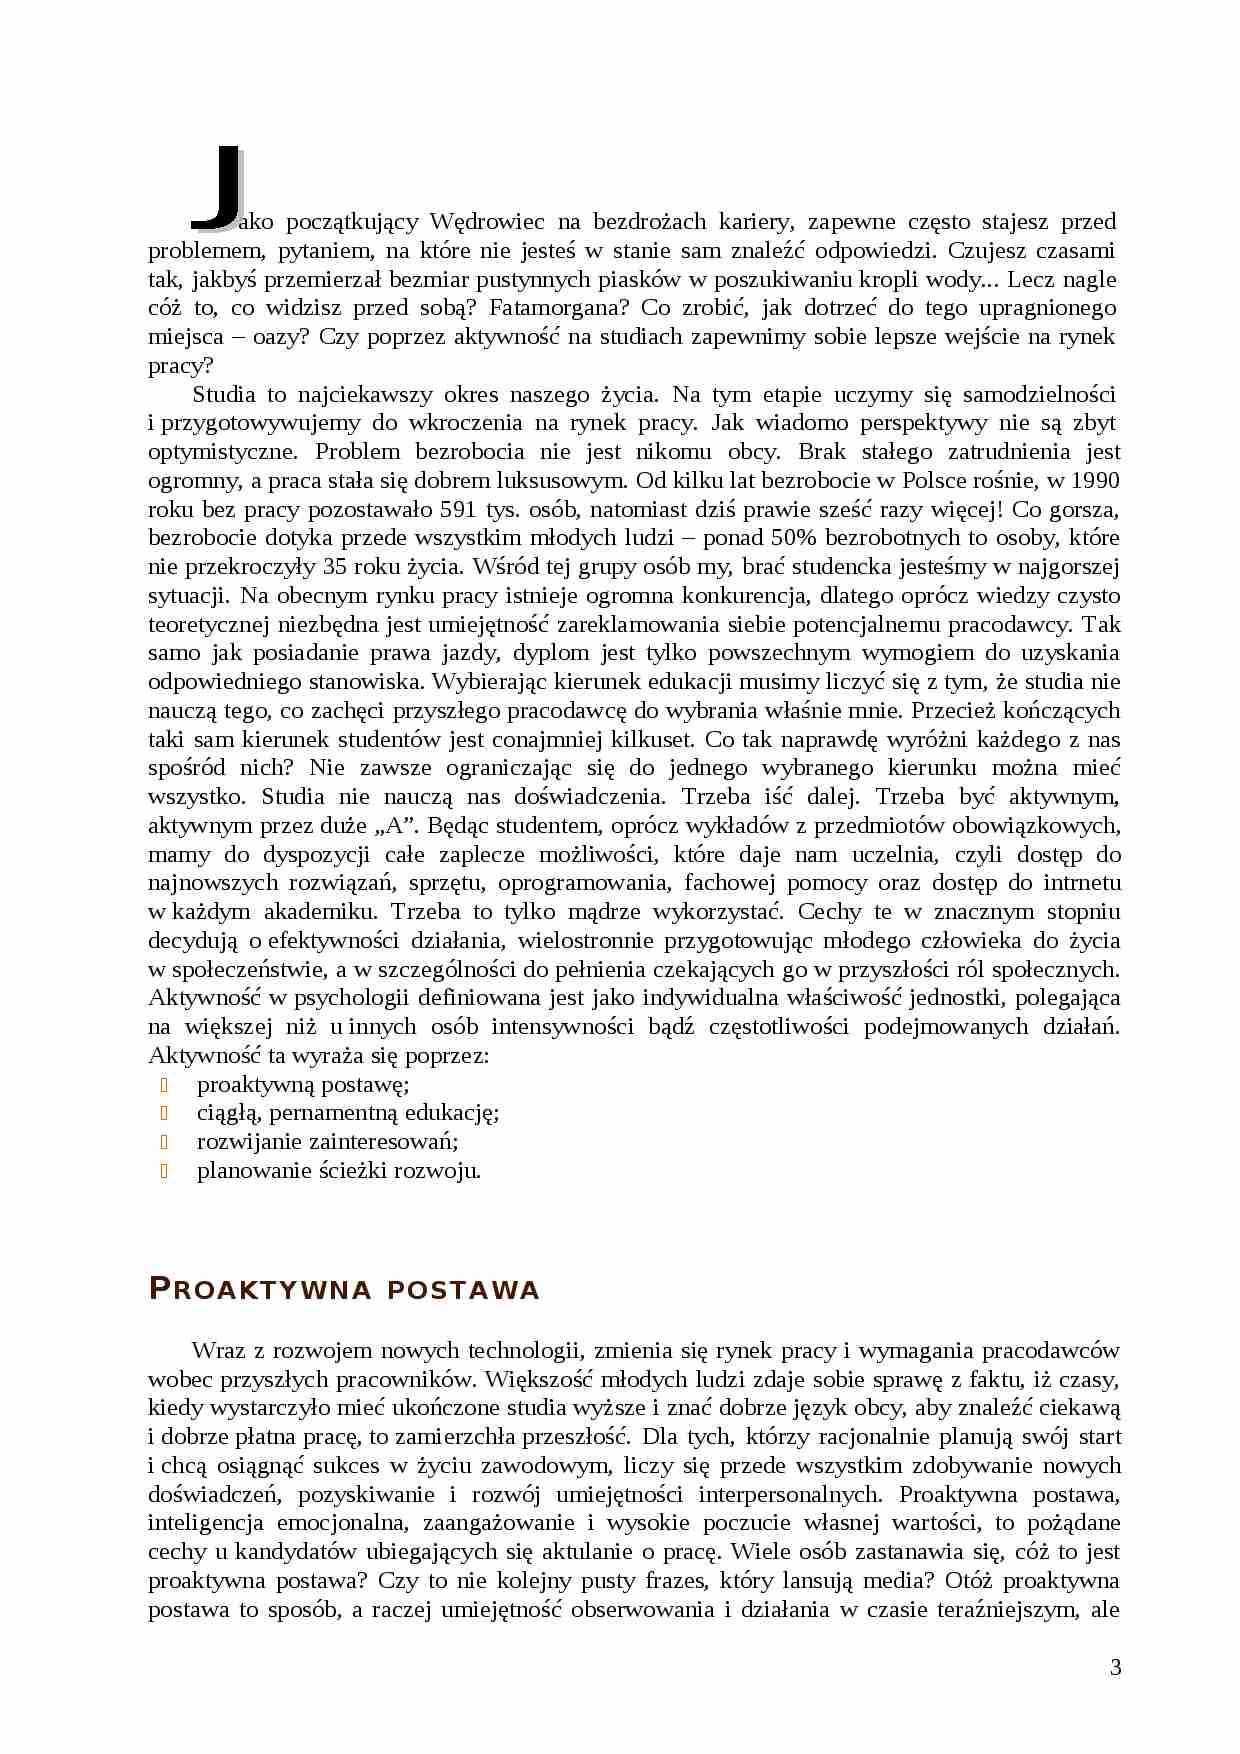 PROAKTYWNA POSTAWA- pedagogika - strona 1